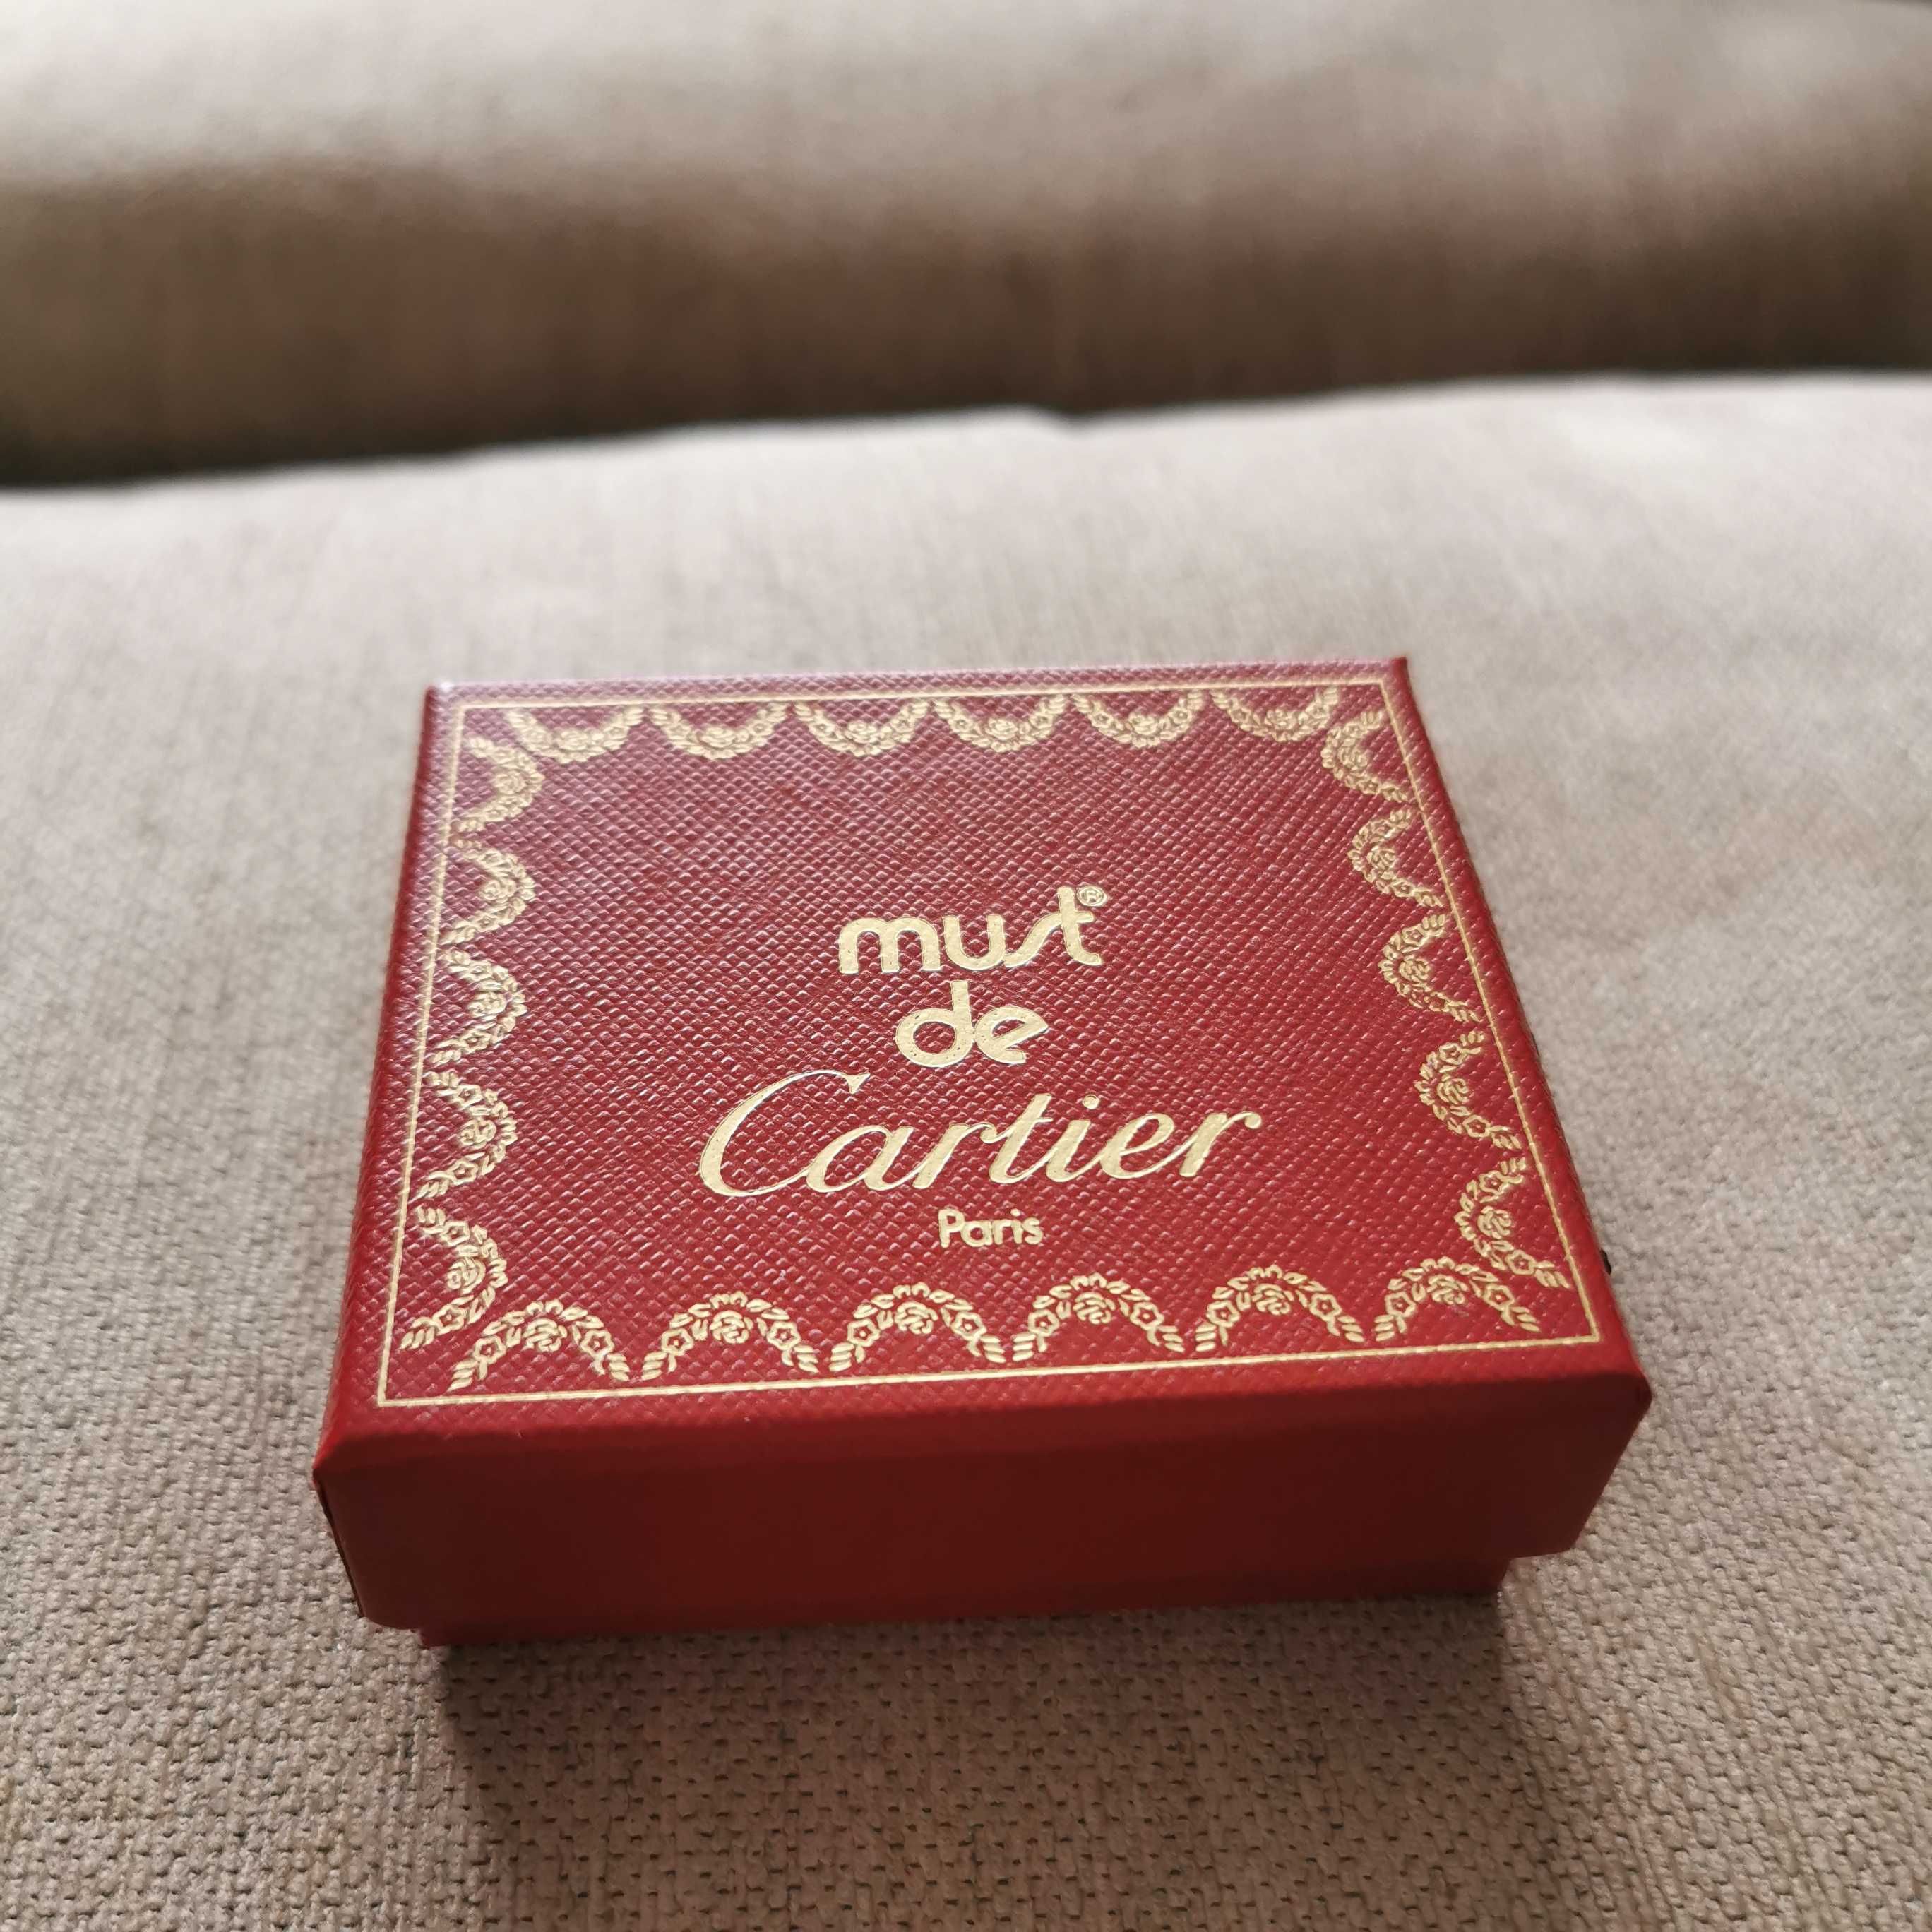 Cartier “C décor” Pill Box - srebro 925